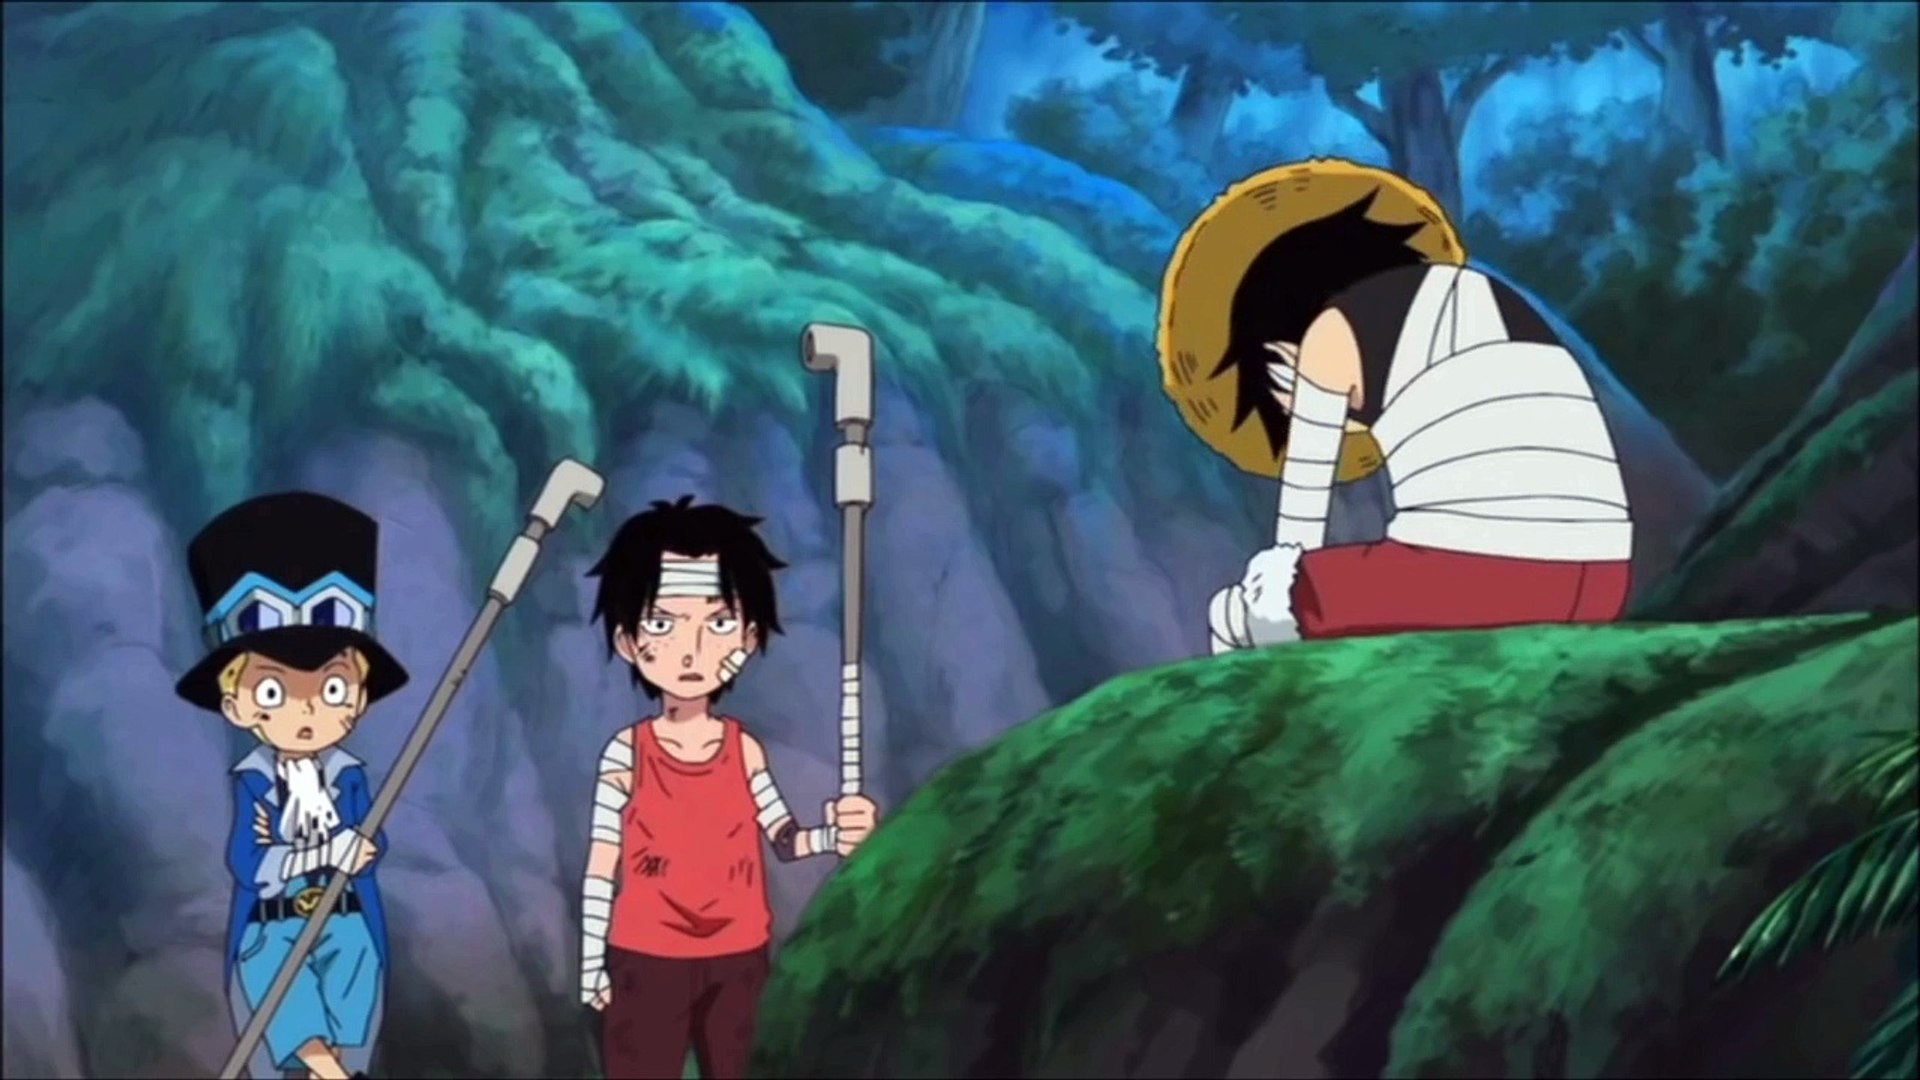 Casa do Otaku - Luffy usando o chapéu do Ace e do Sabo!